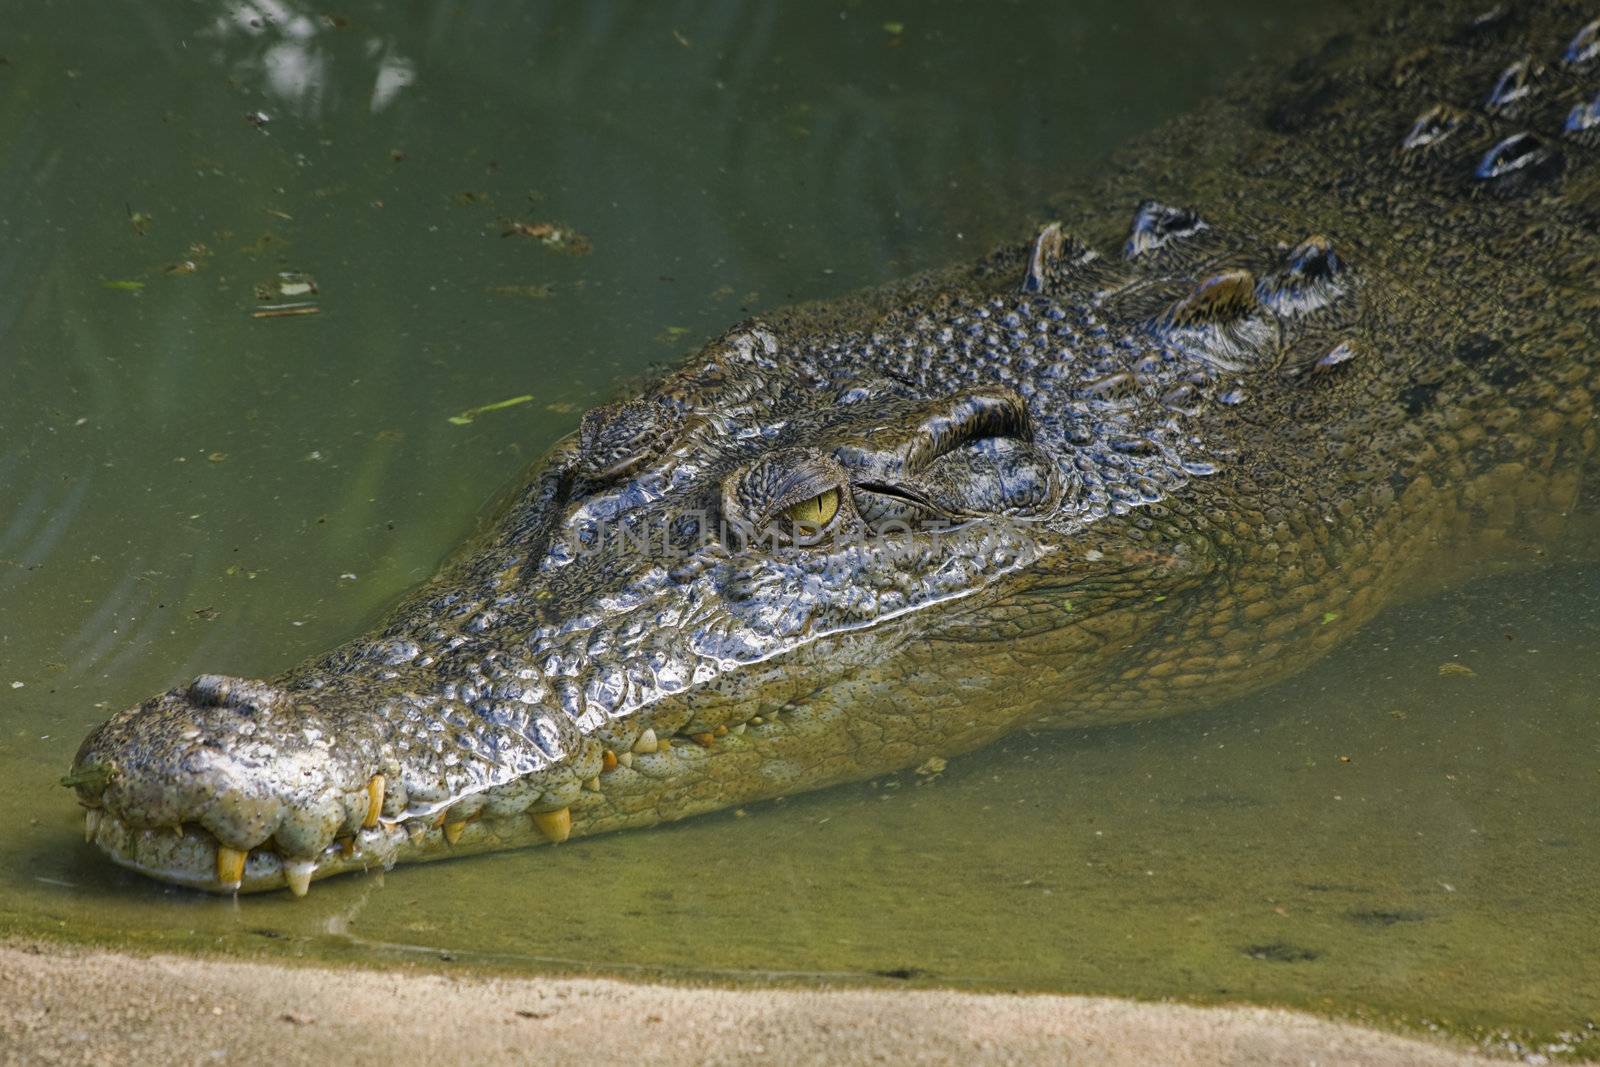 An Australian estuarine crocodile (Crocodylus porosus) lurking in shallow water near sand bank